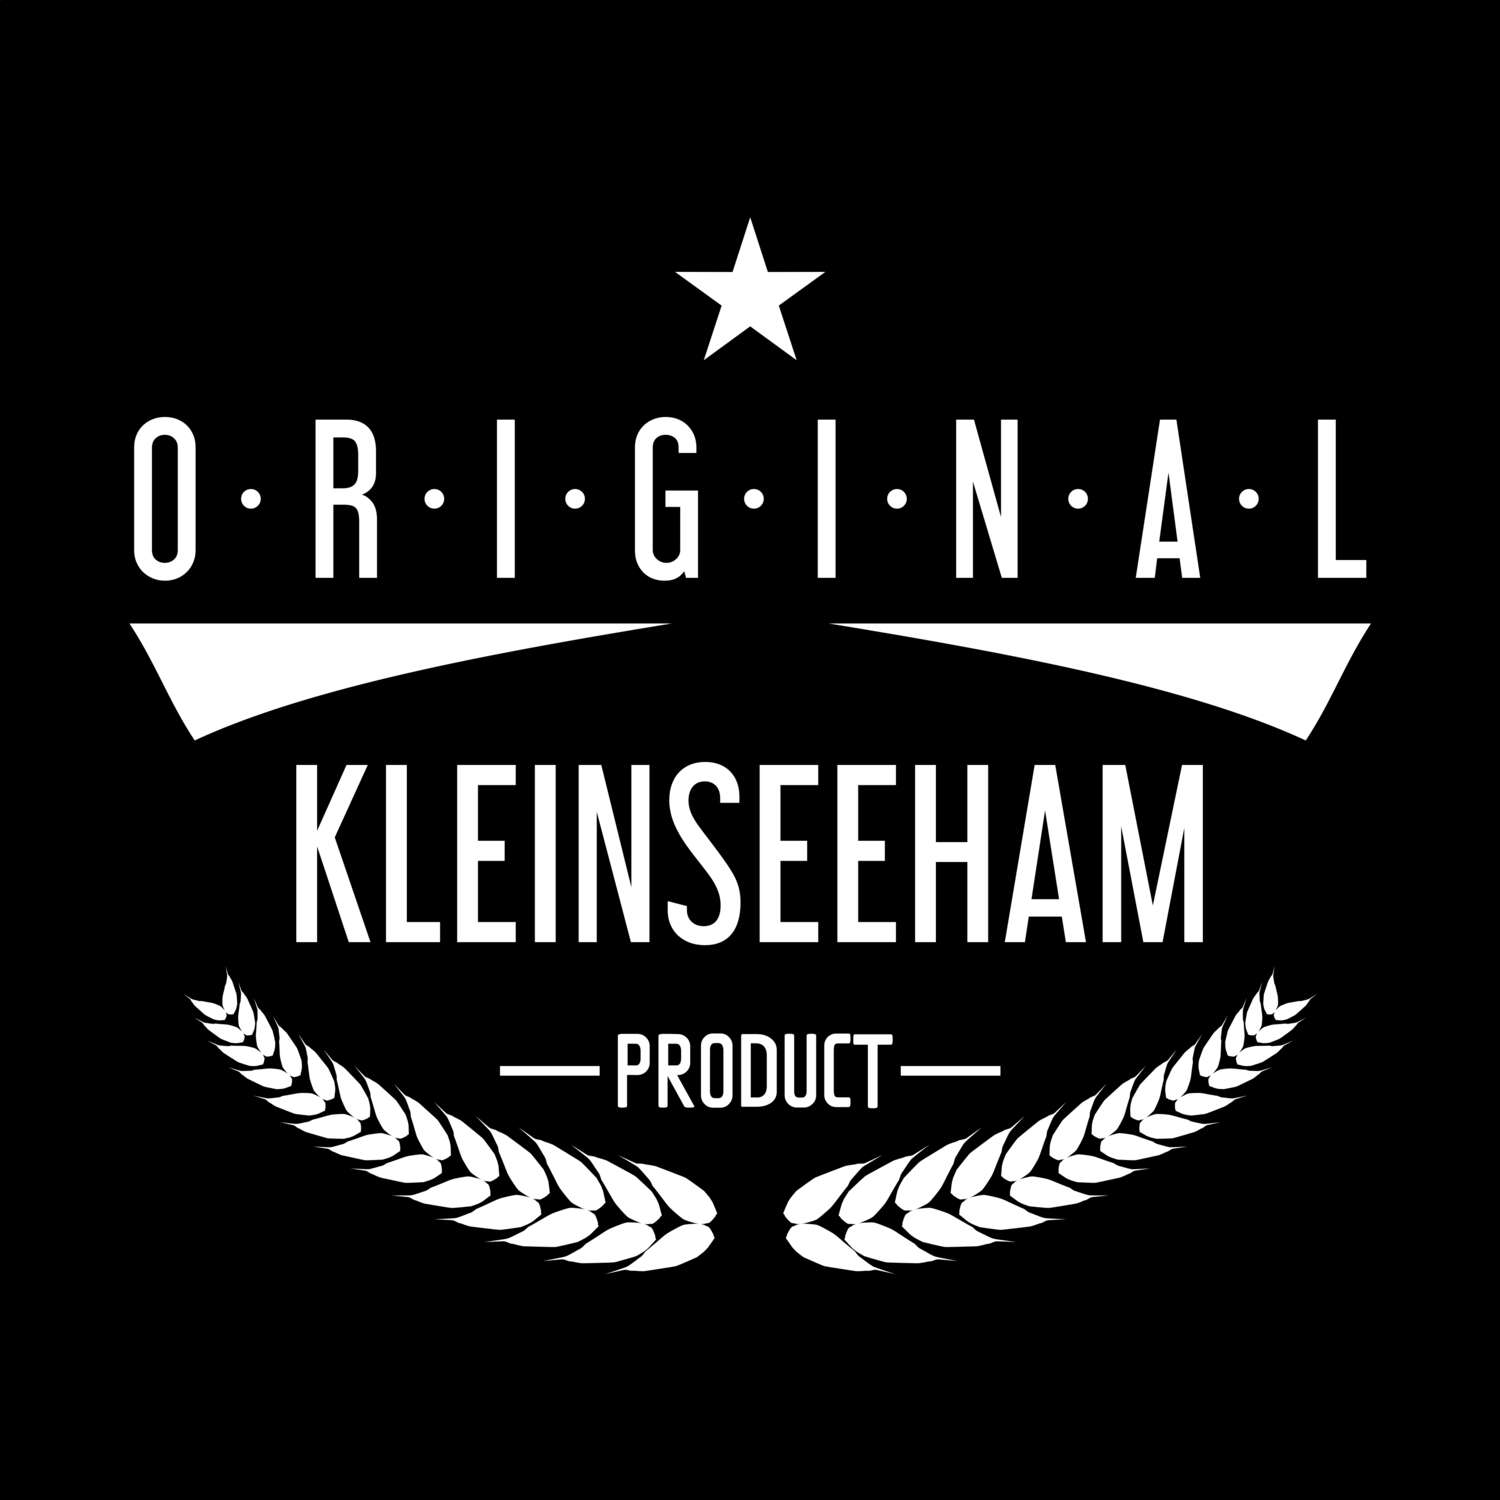 Kleinseeham T-Shirt »Original Product«